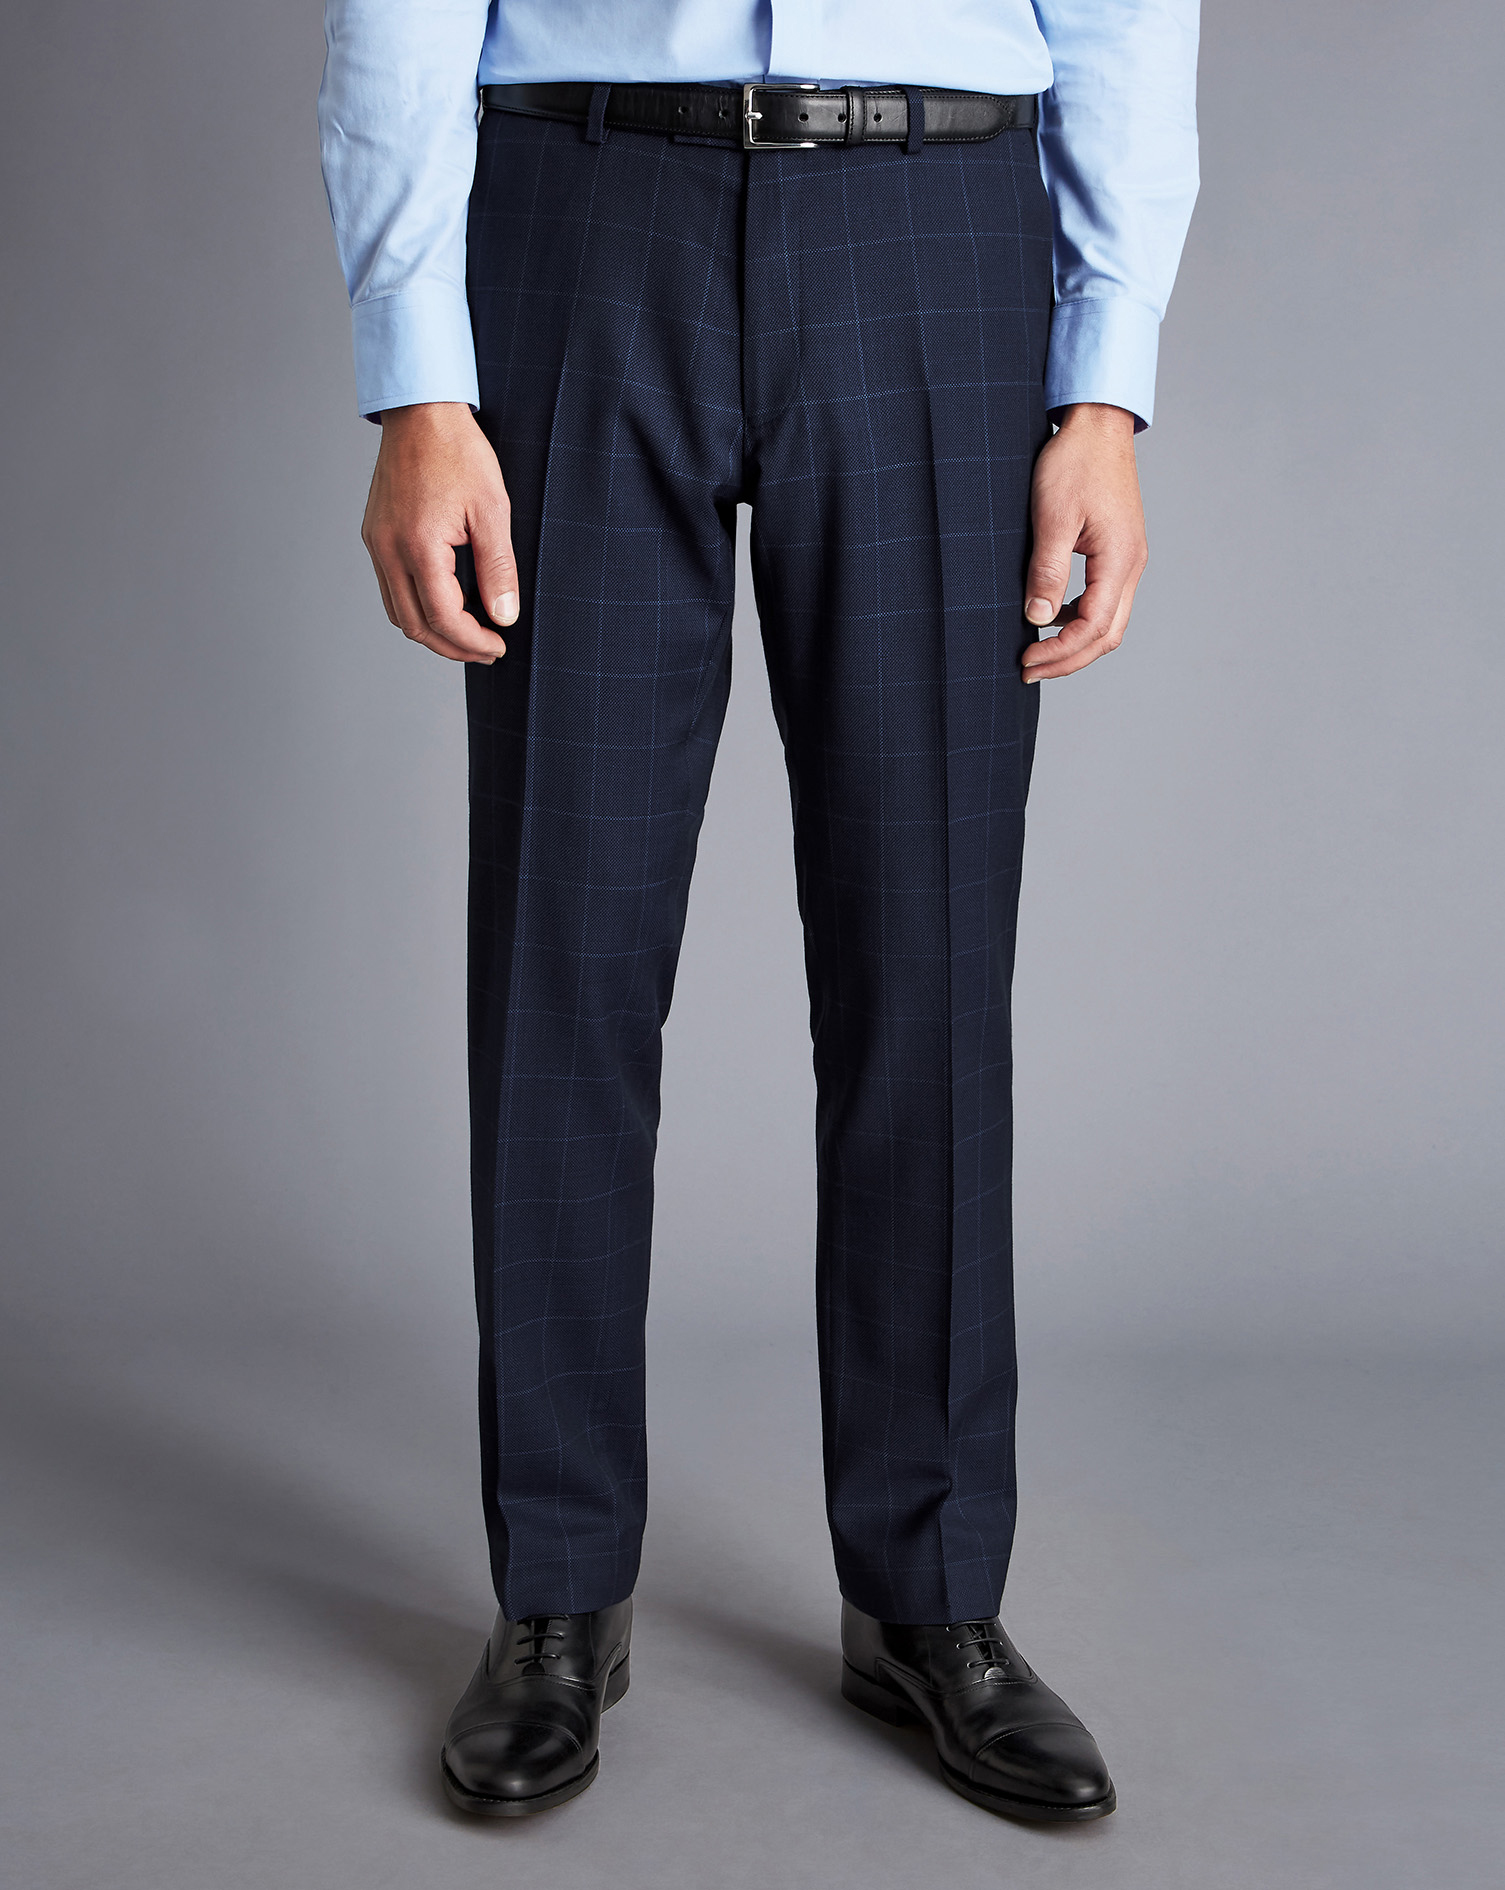 Men's Charles Tyrwhitt Windowpane Check Birdseye Travel Suit Trousers - Navy Blue Size 34/38U Wool
